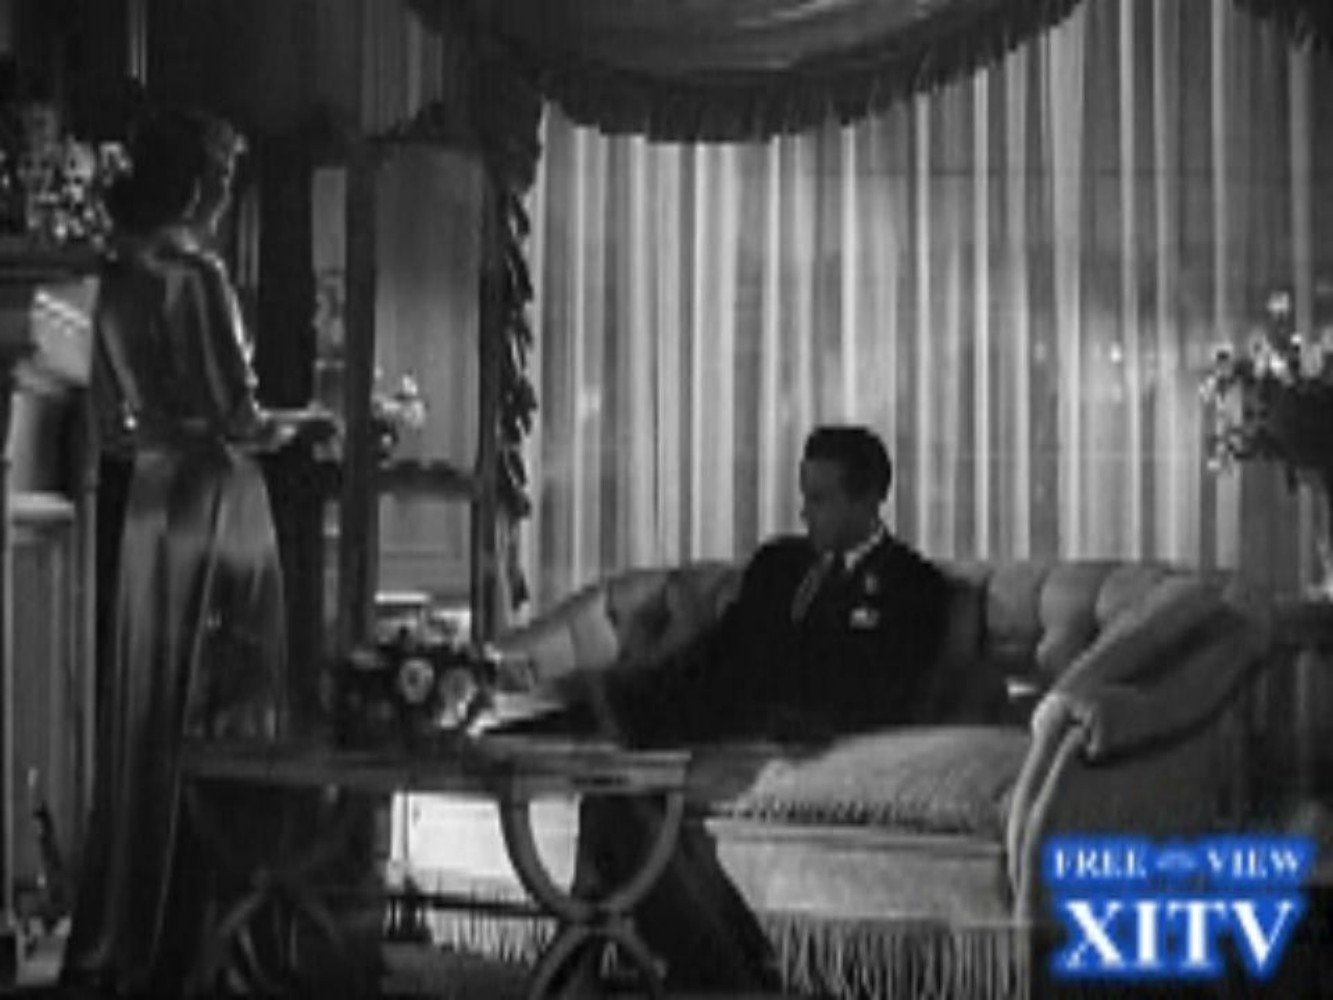 Watch Now! XITV FREE <> VIEW™ "CASABLANCA" Starring Ingrid Bergman and Humphrey Bogart! XITV Is Must See TV!